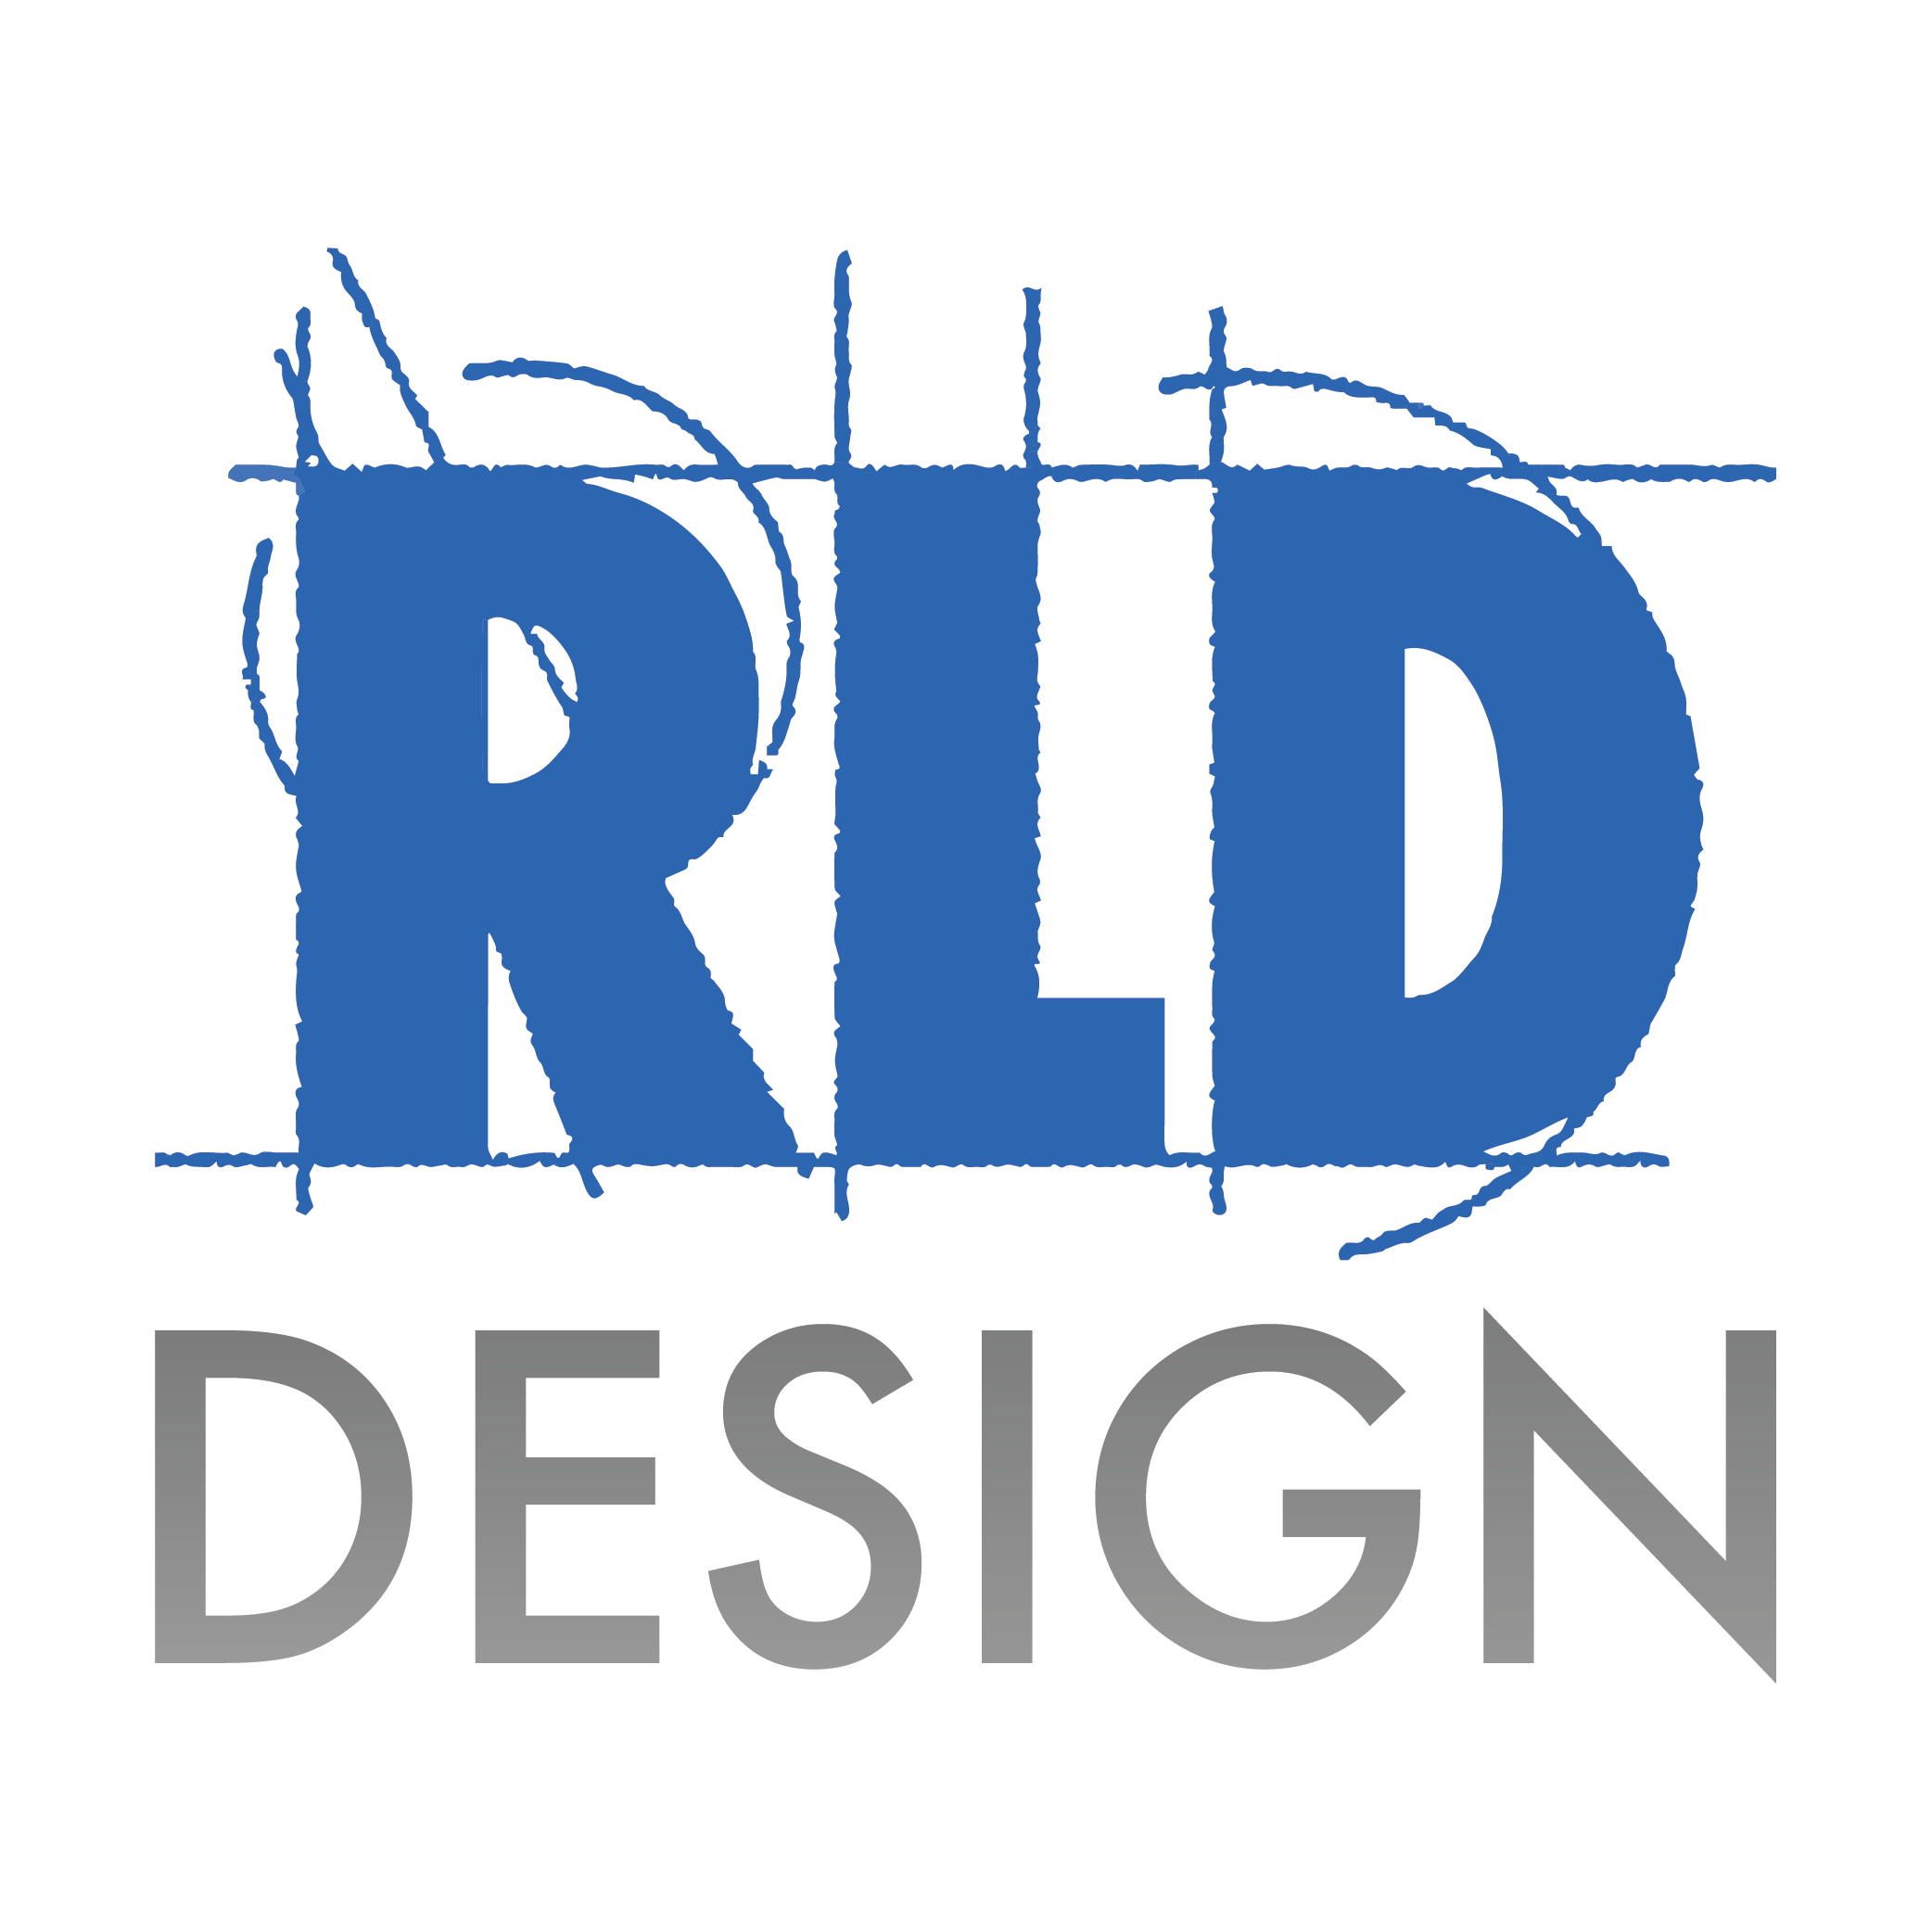 RLD Design